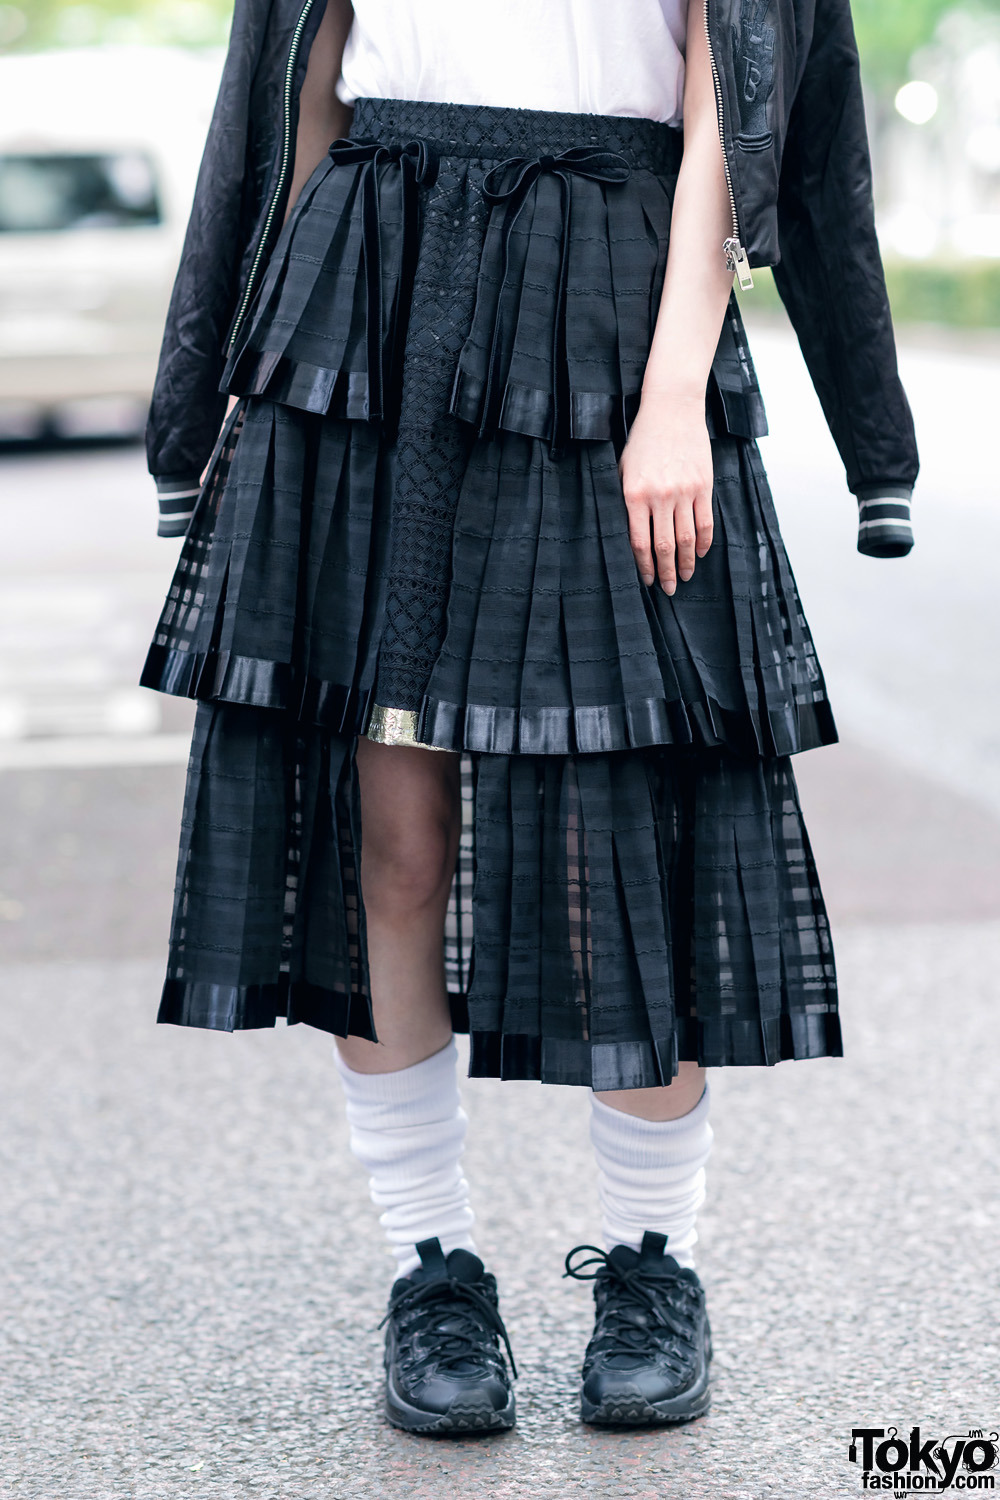 tokyo-fashion:  RinRin Doll on the street in Harajuku wearing a satin jacket off